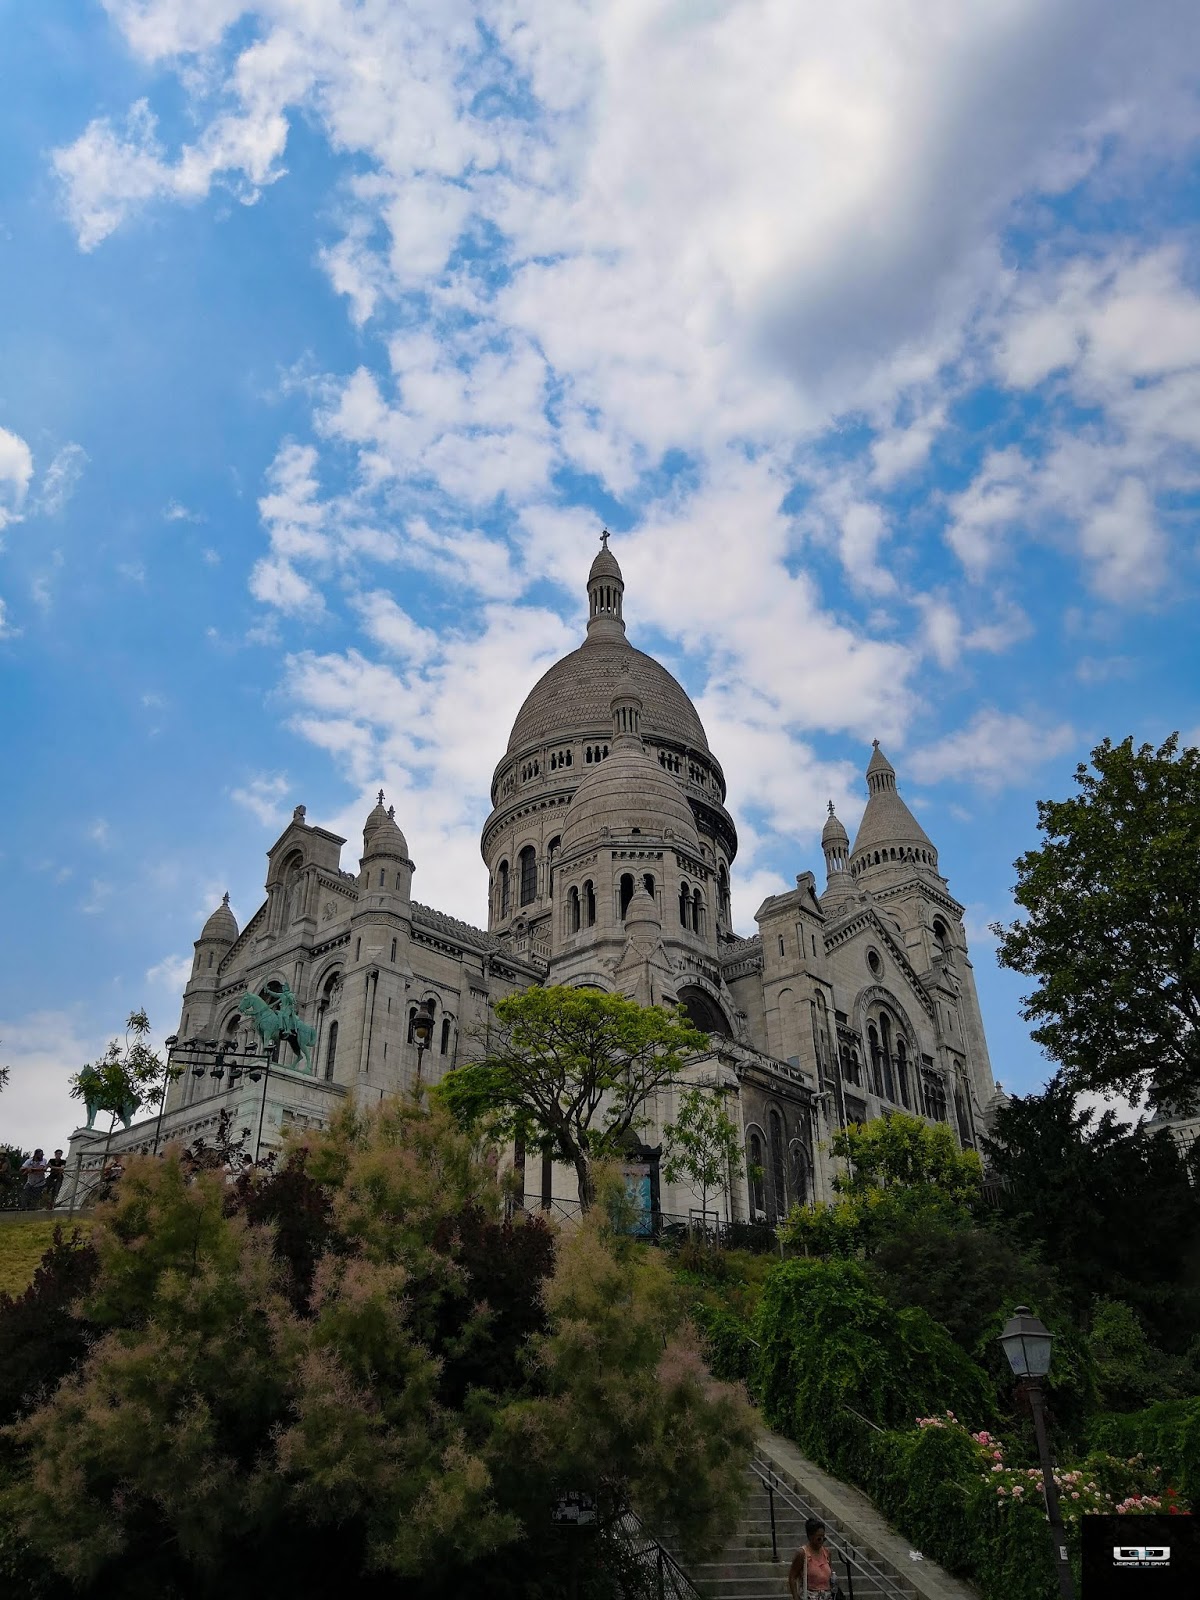 Sacré-Cœur - Basilica of the Sacred Heart of Paris